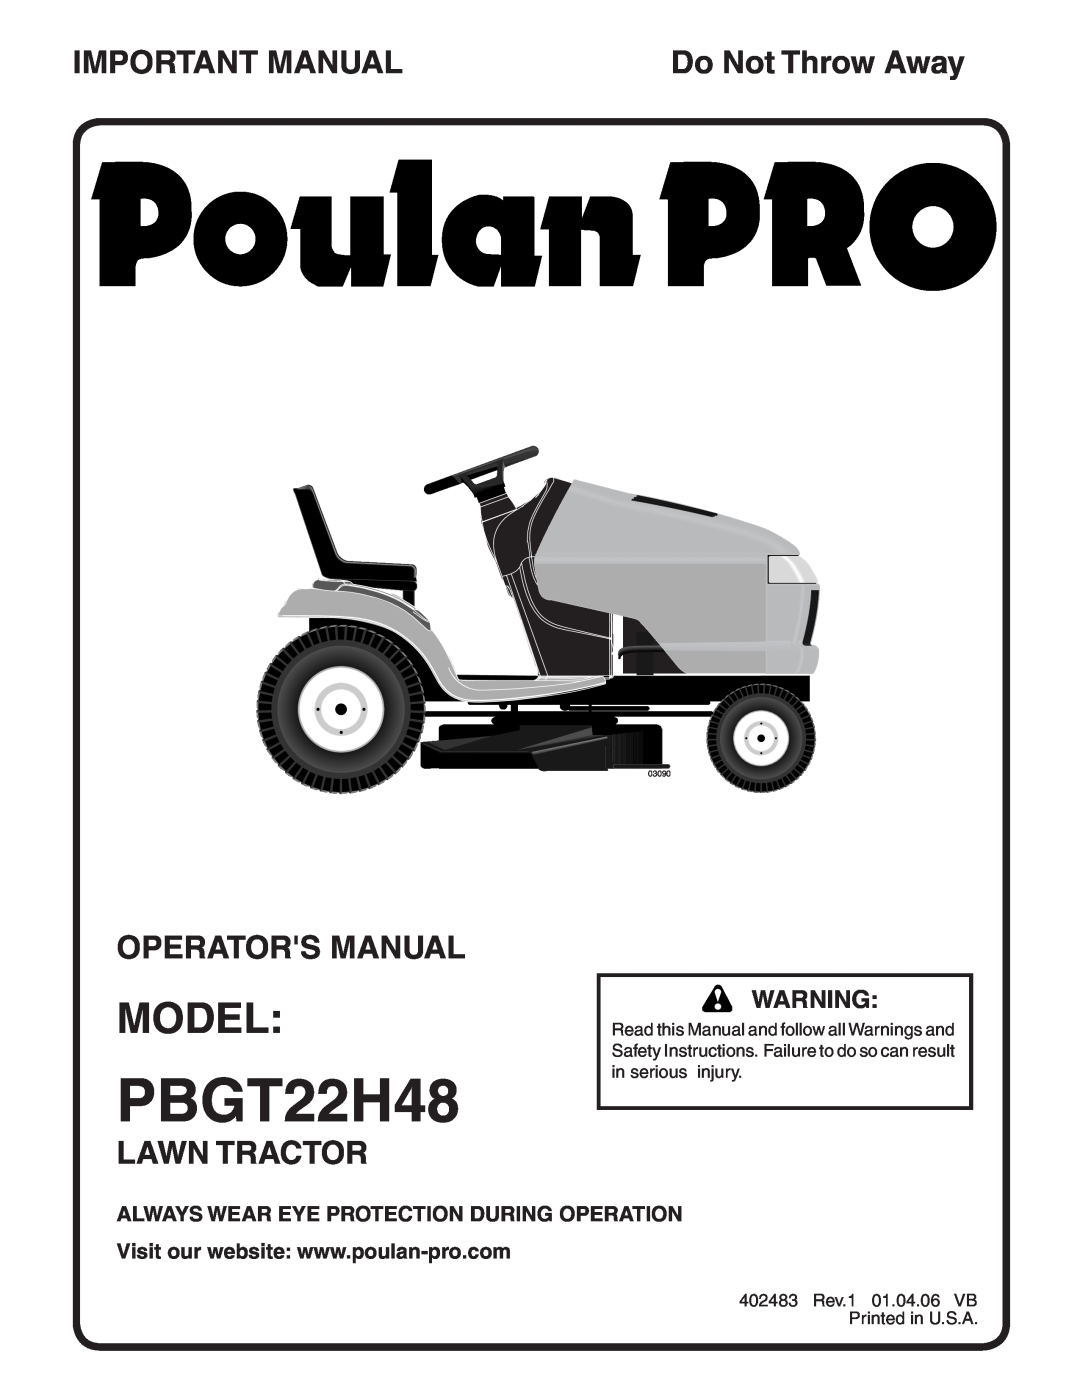 Poulan PBGT22H48 manual Model, Important Manual, Operators Manual, Lawn Tractor, Do Not Throw Away, 03090 